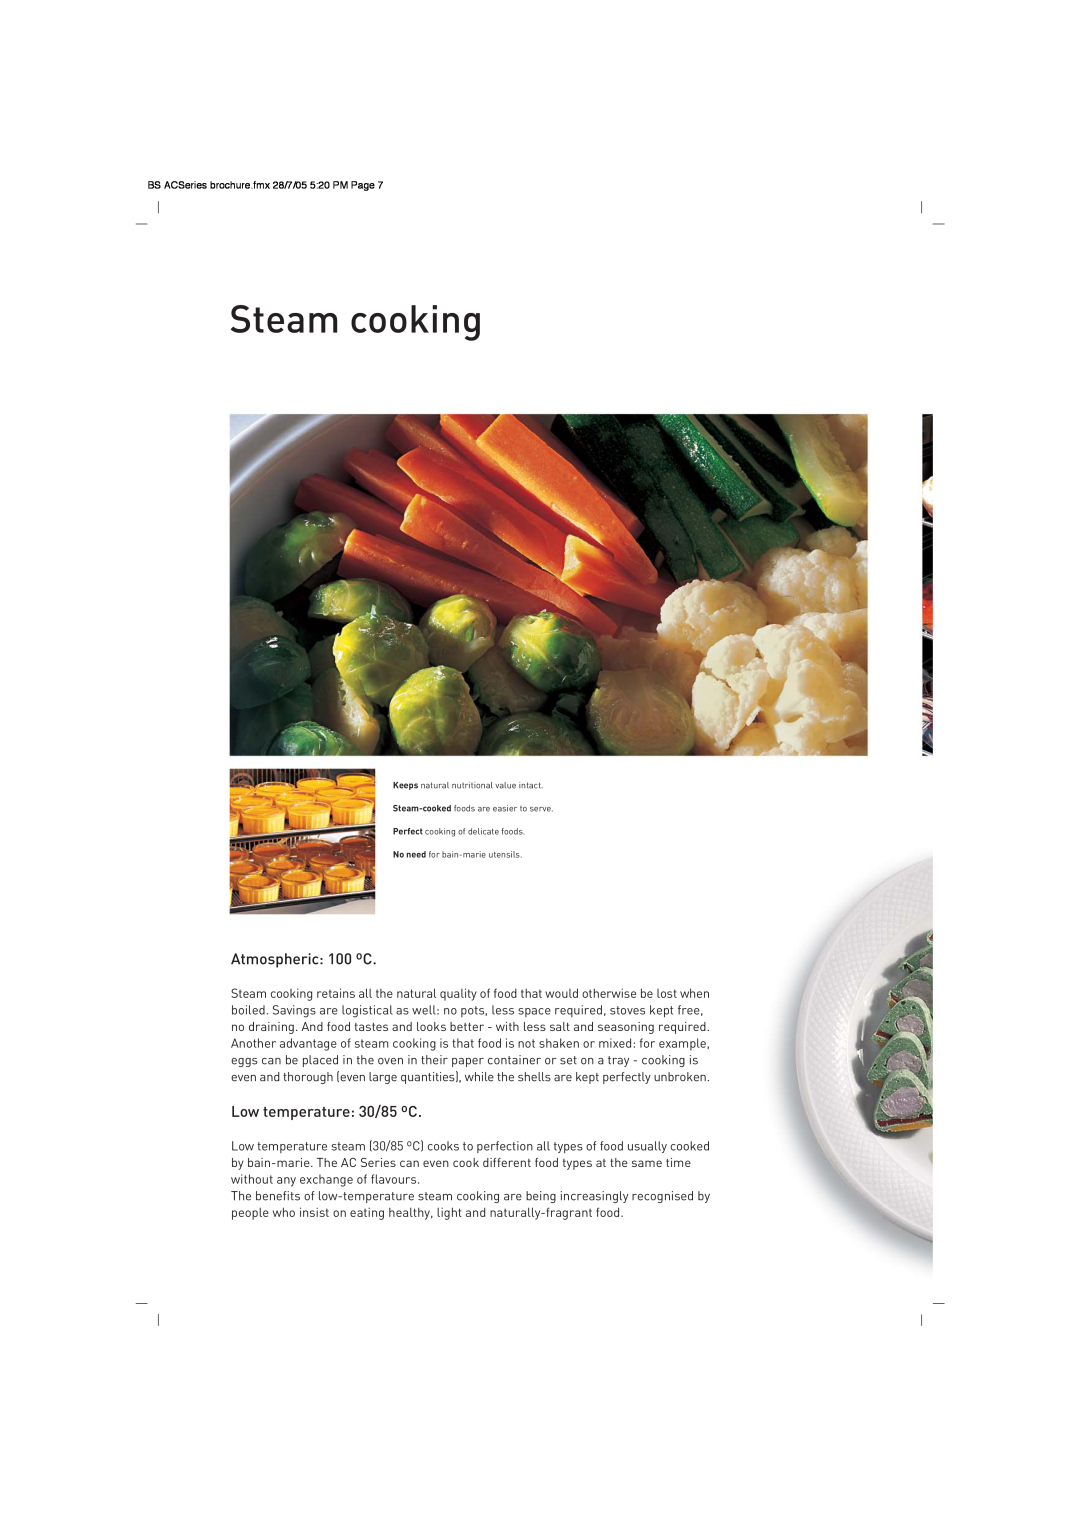 Moffat AC Series brochure Steam cooking, Atmospheric 100 ºC, Low temperature 30/85 ºC 